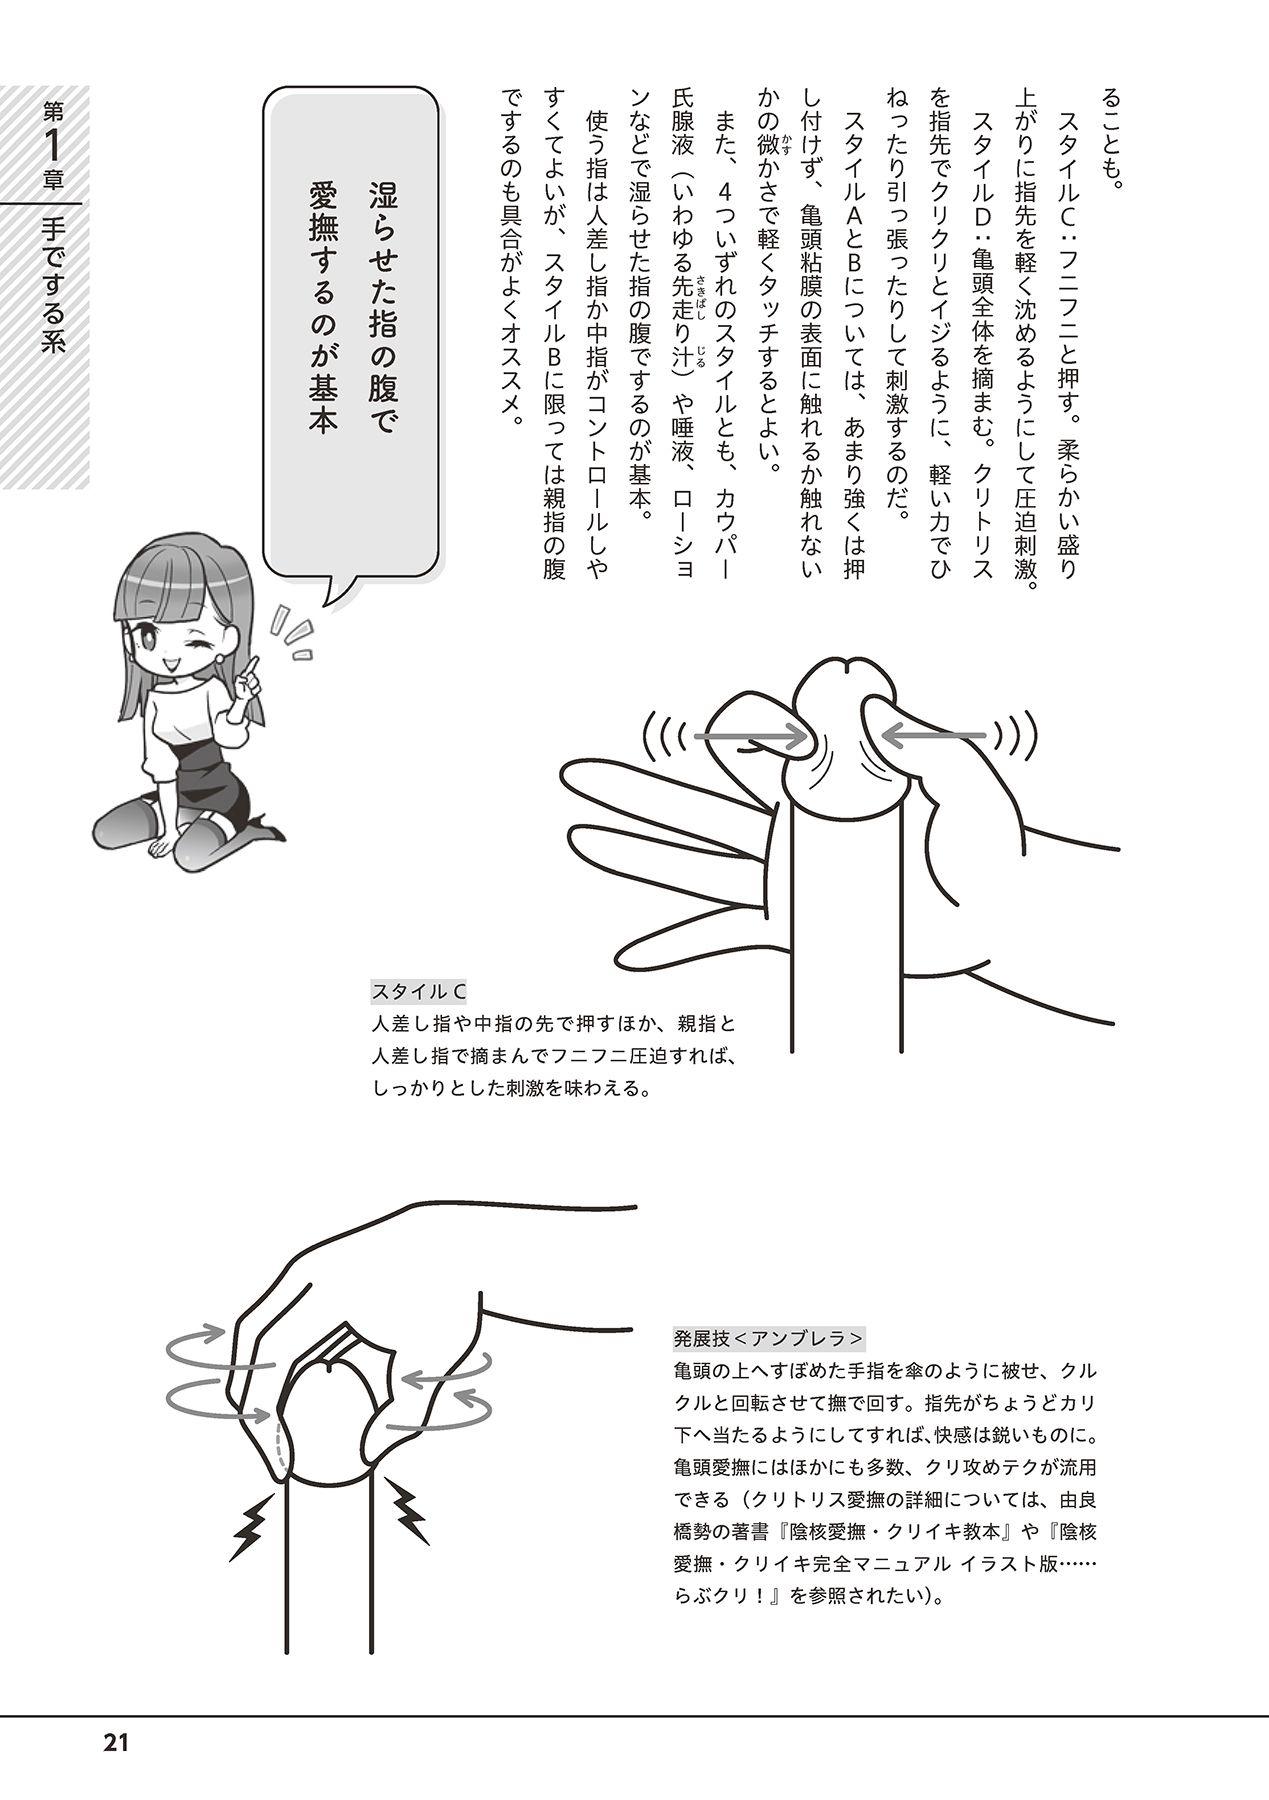 Otoko no Jii Onanie Kanzen Manual Illustration Han...... Onanie Play 22